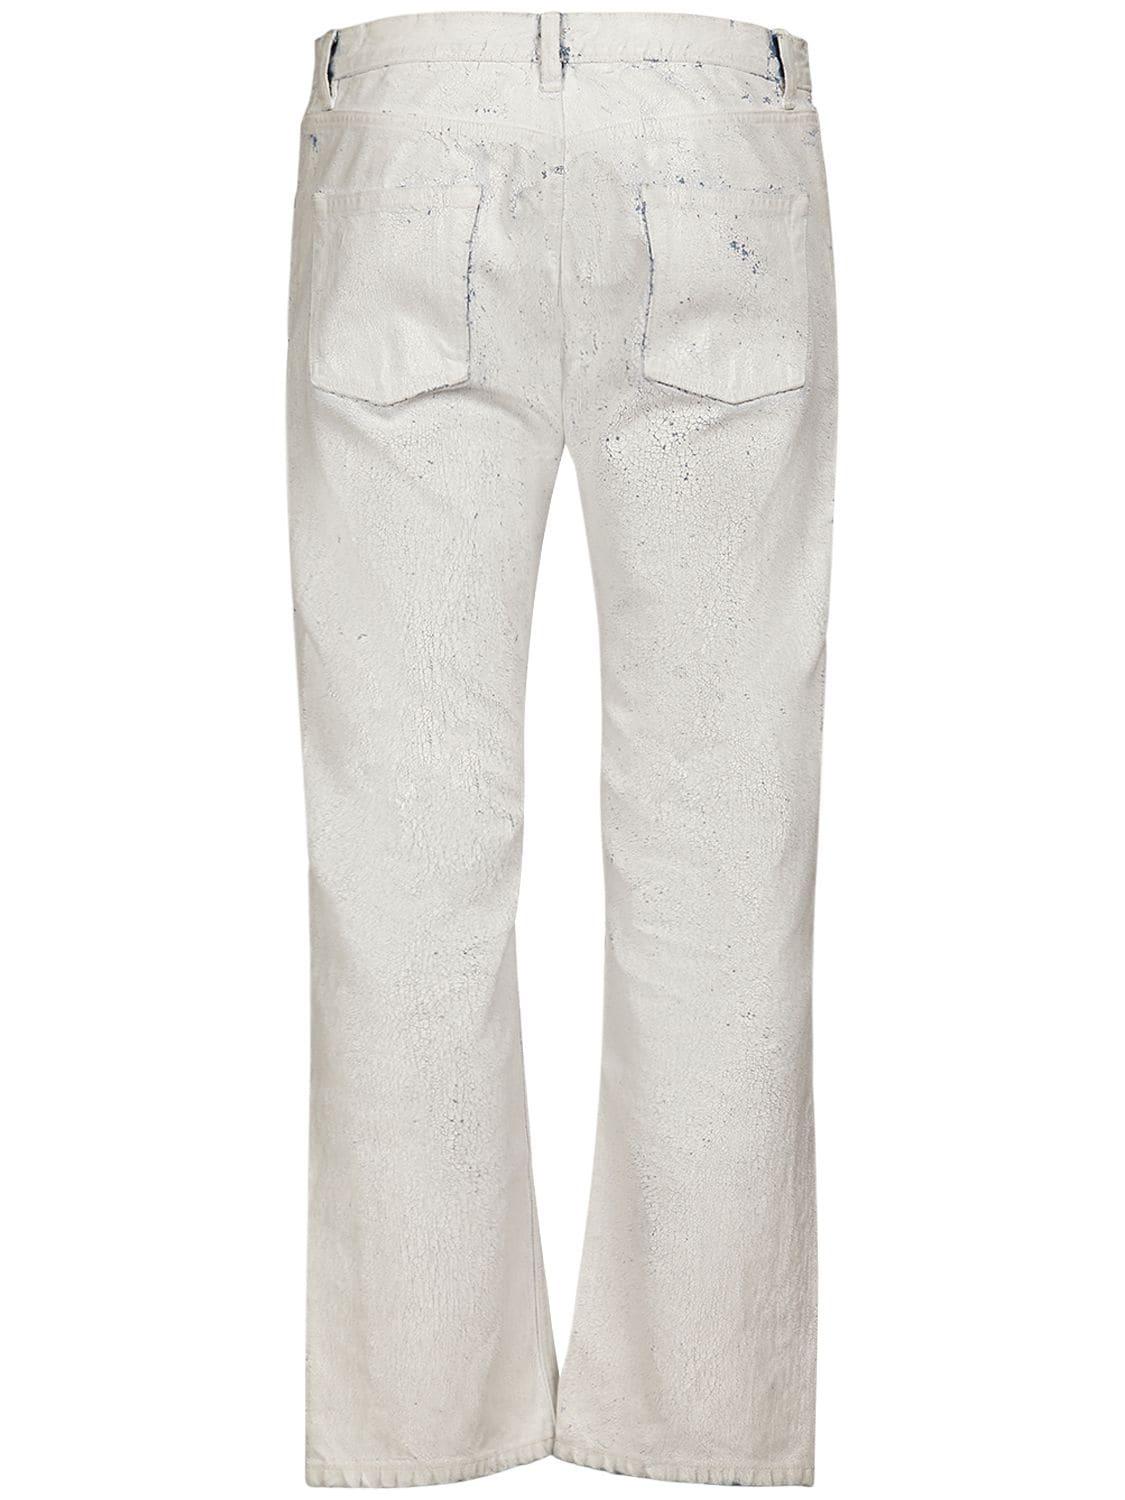 Maison Margiela Cracked Paint Cotton Denim Jeans in White for Men